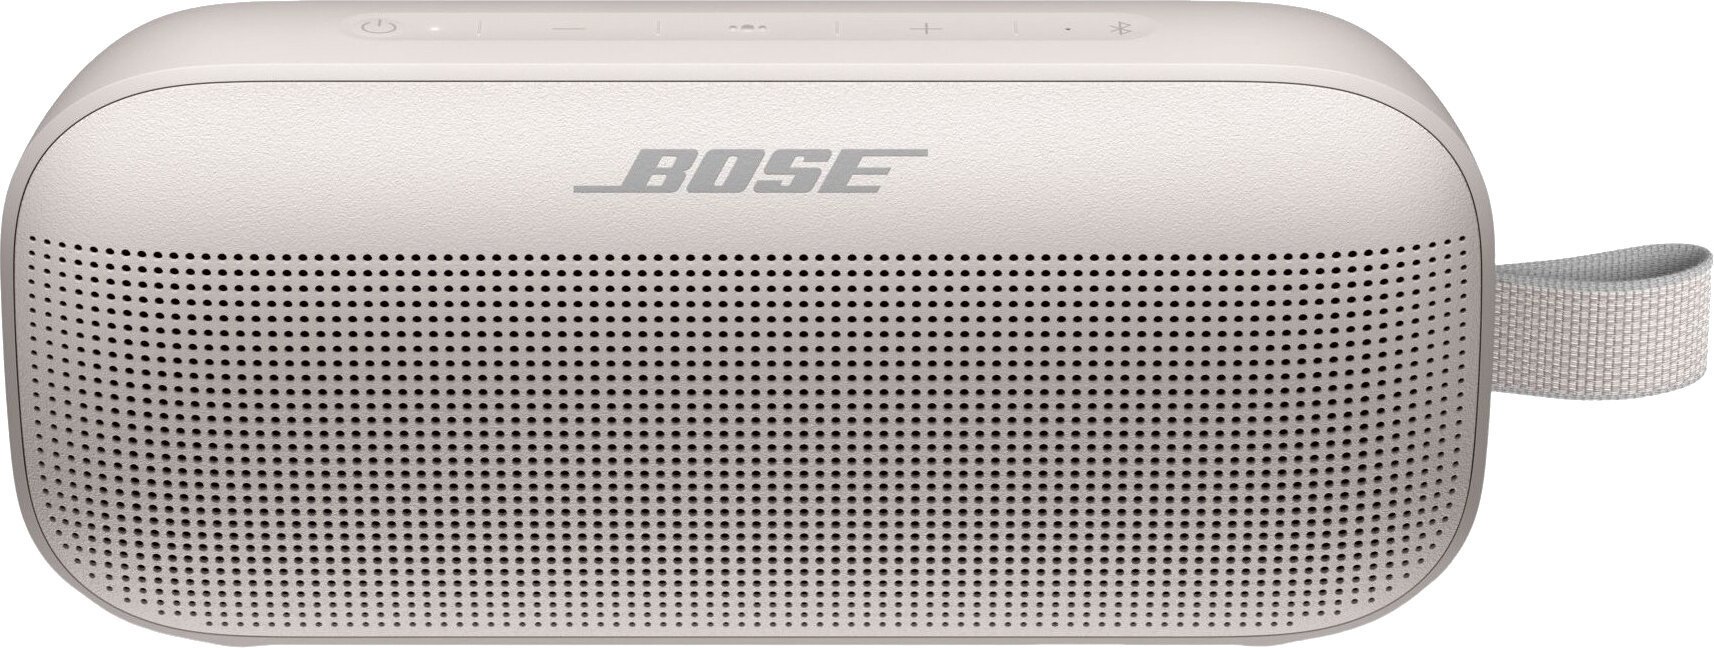 Kolumny przenośne Bose SoundLink Flex White